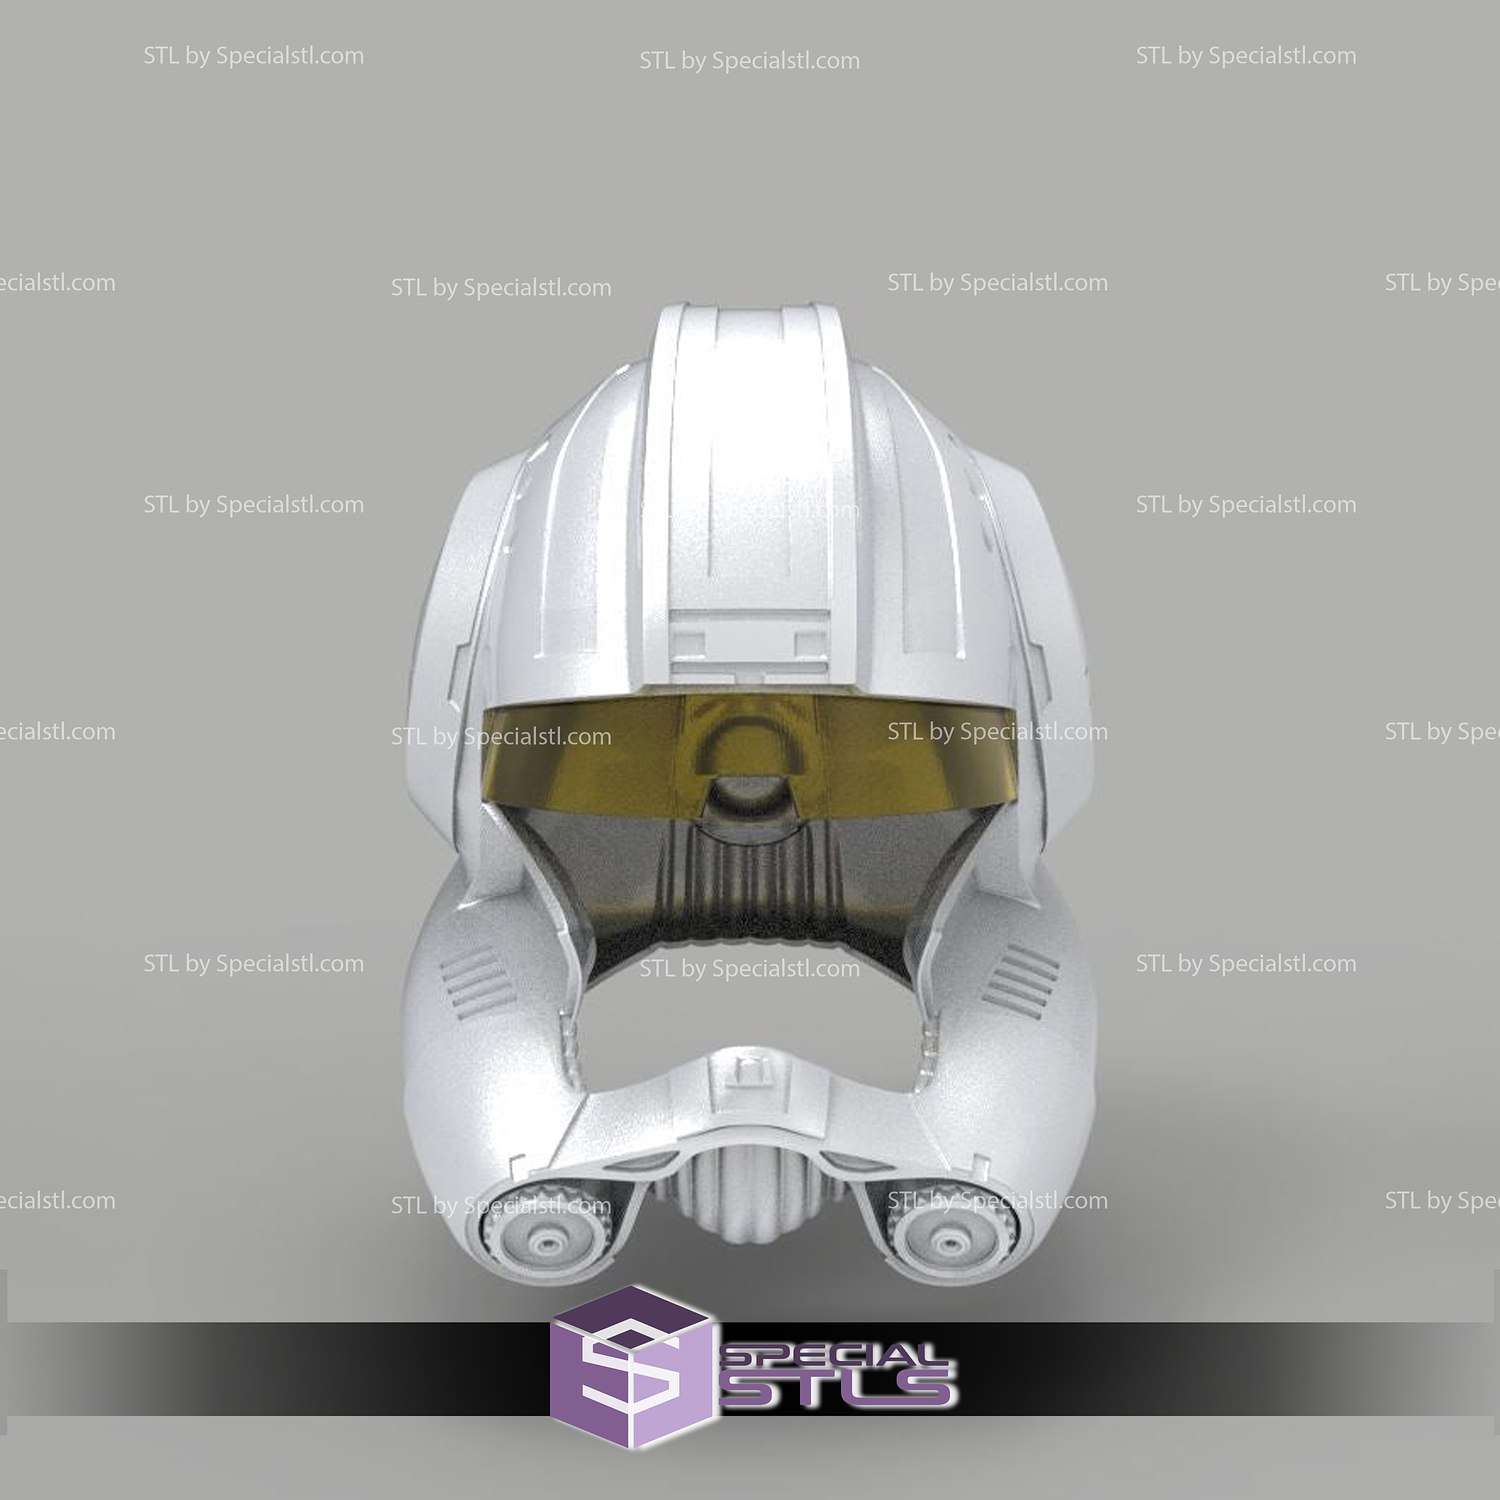 Cosplay STL Files ARC170 Pilot Helmet Starwars 3D Print Wearable